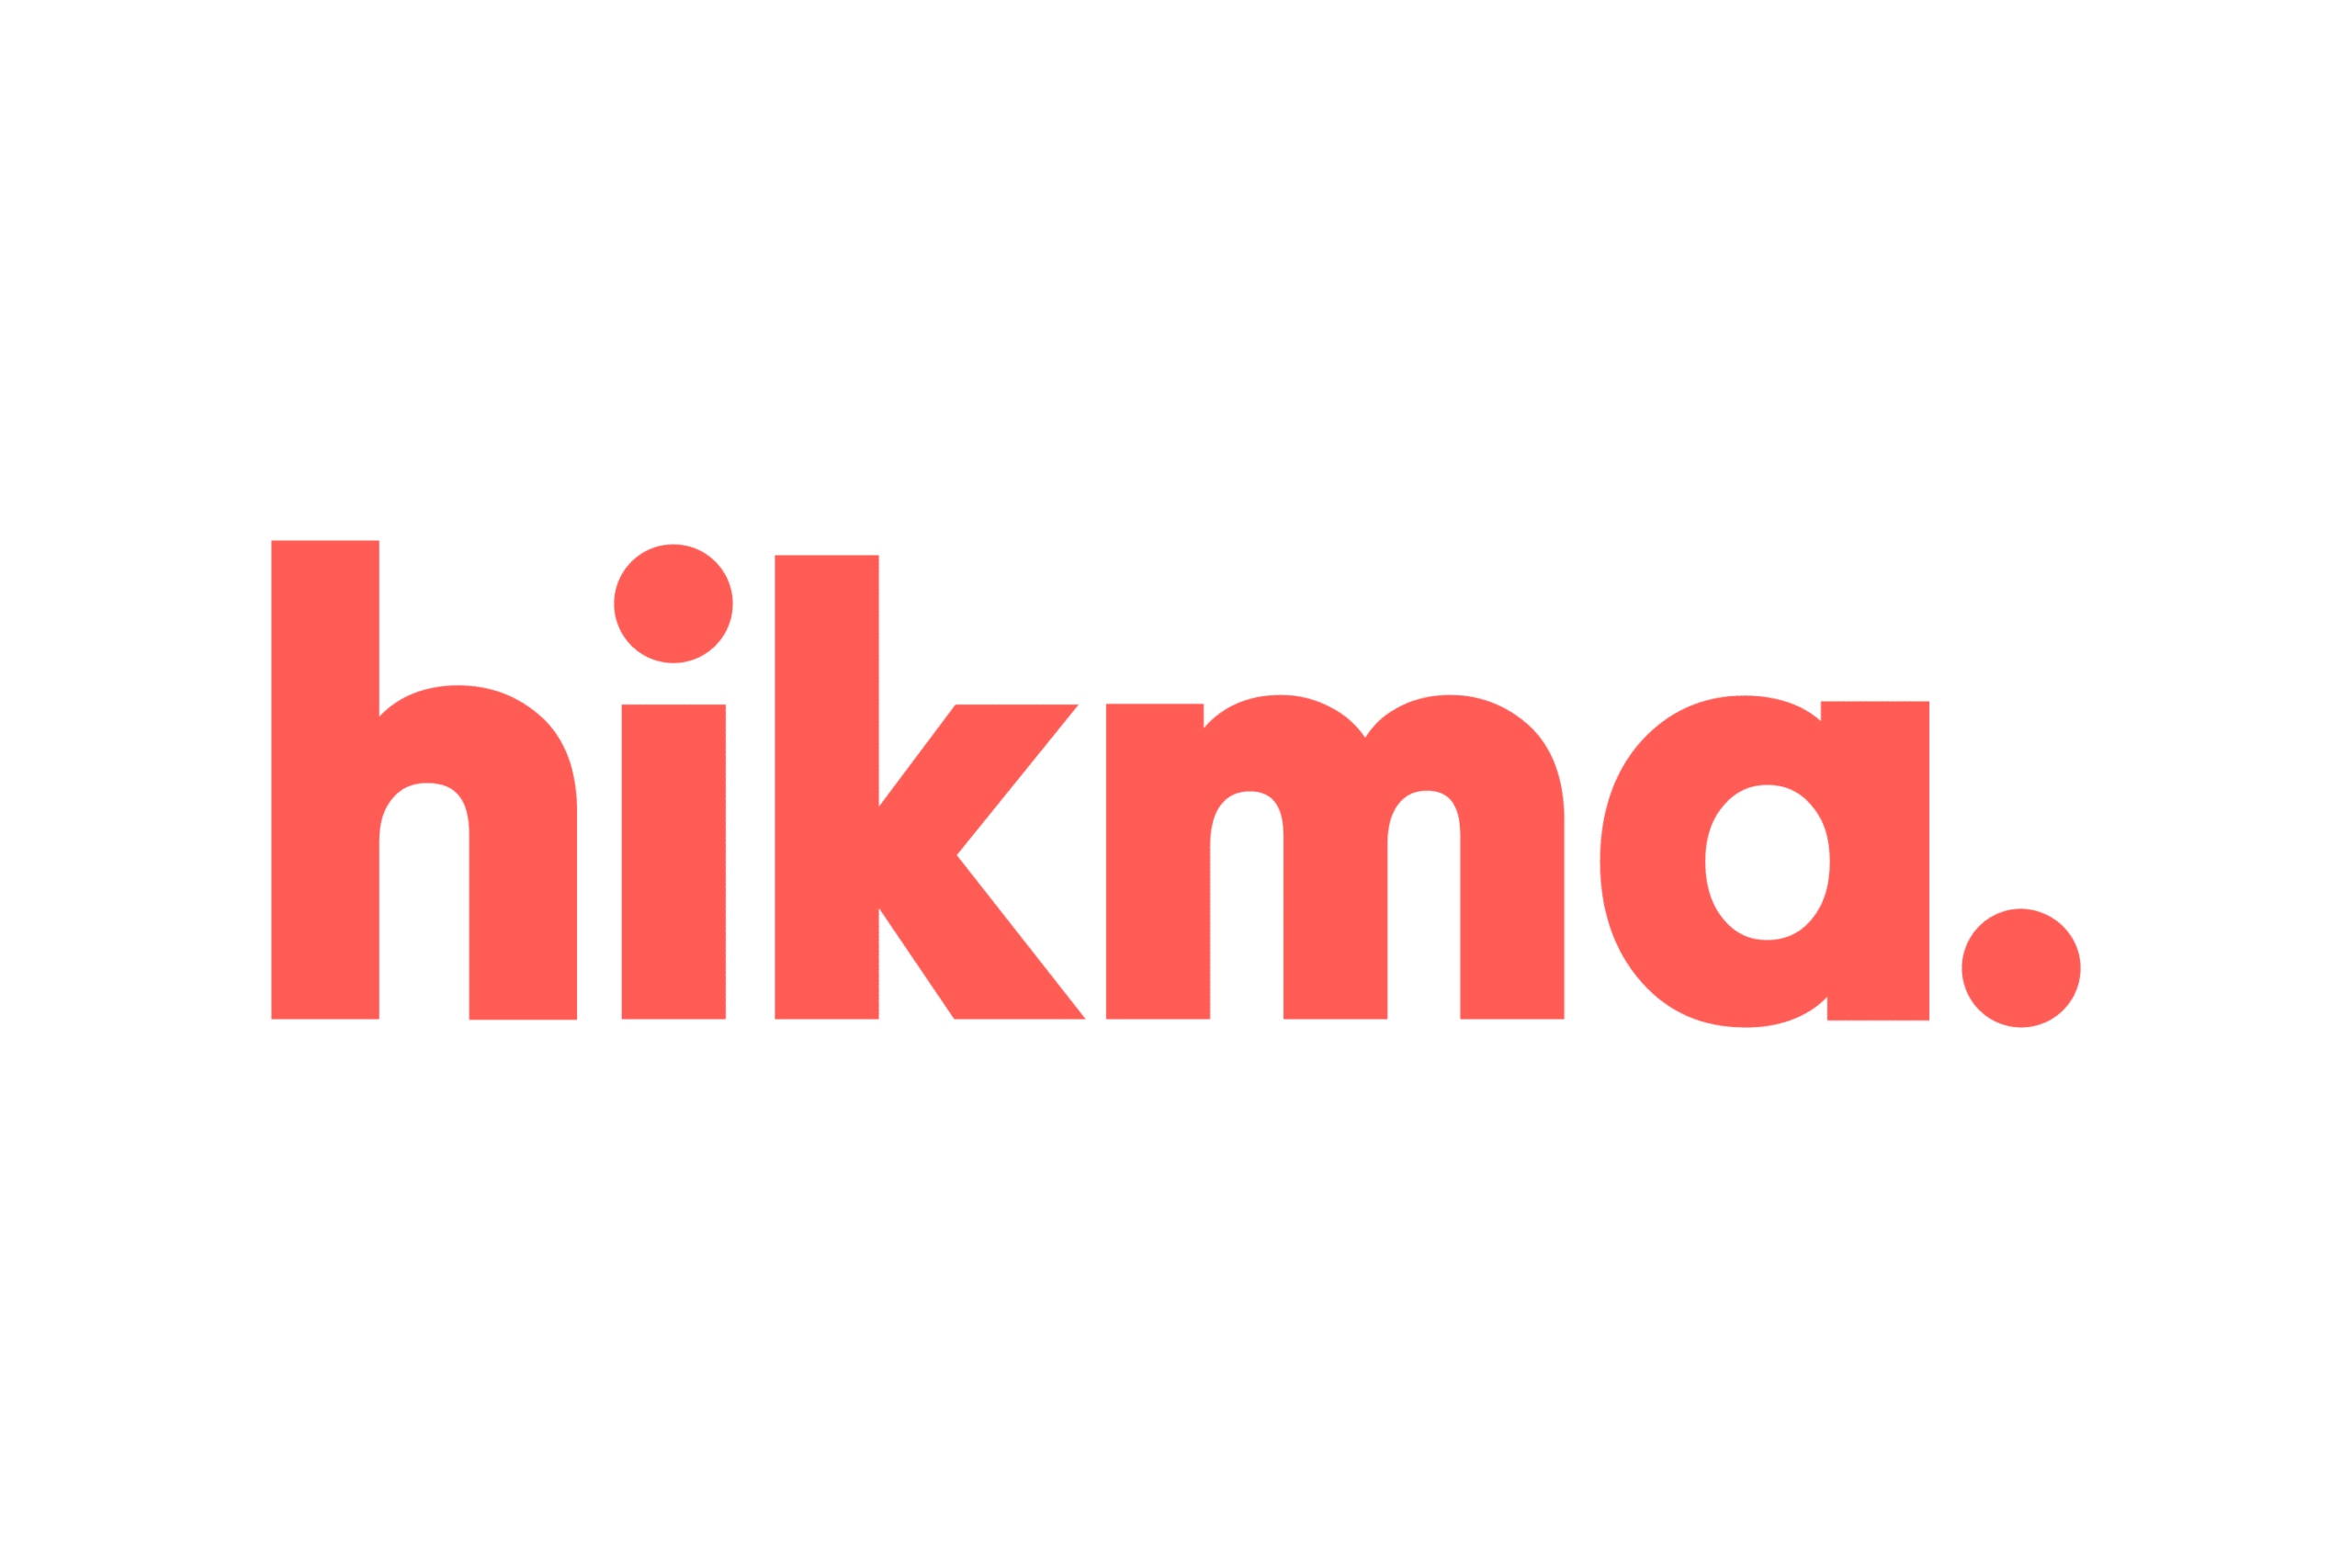 Hikma_Pharmaceuticals-Logo.wine